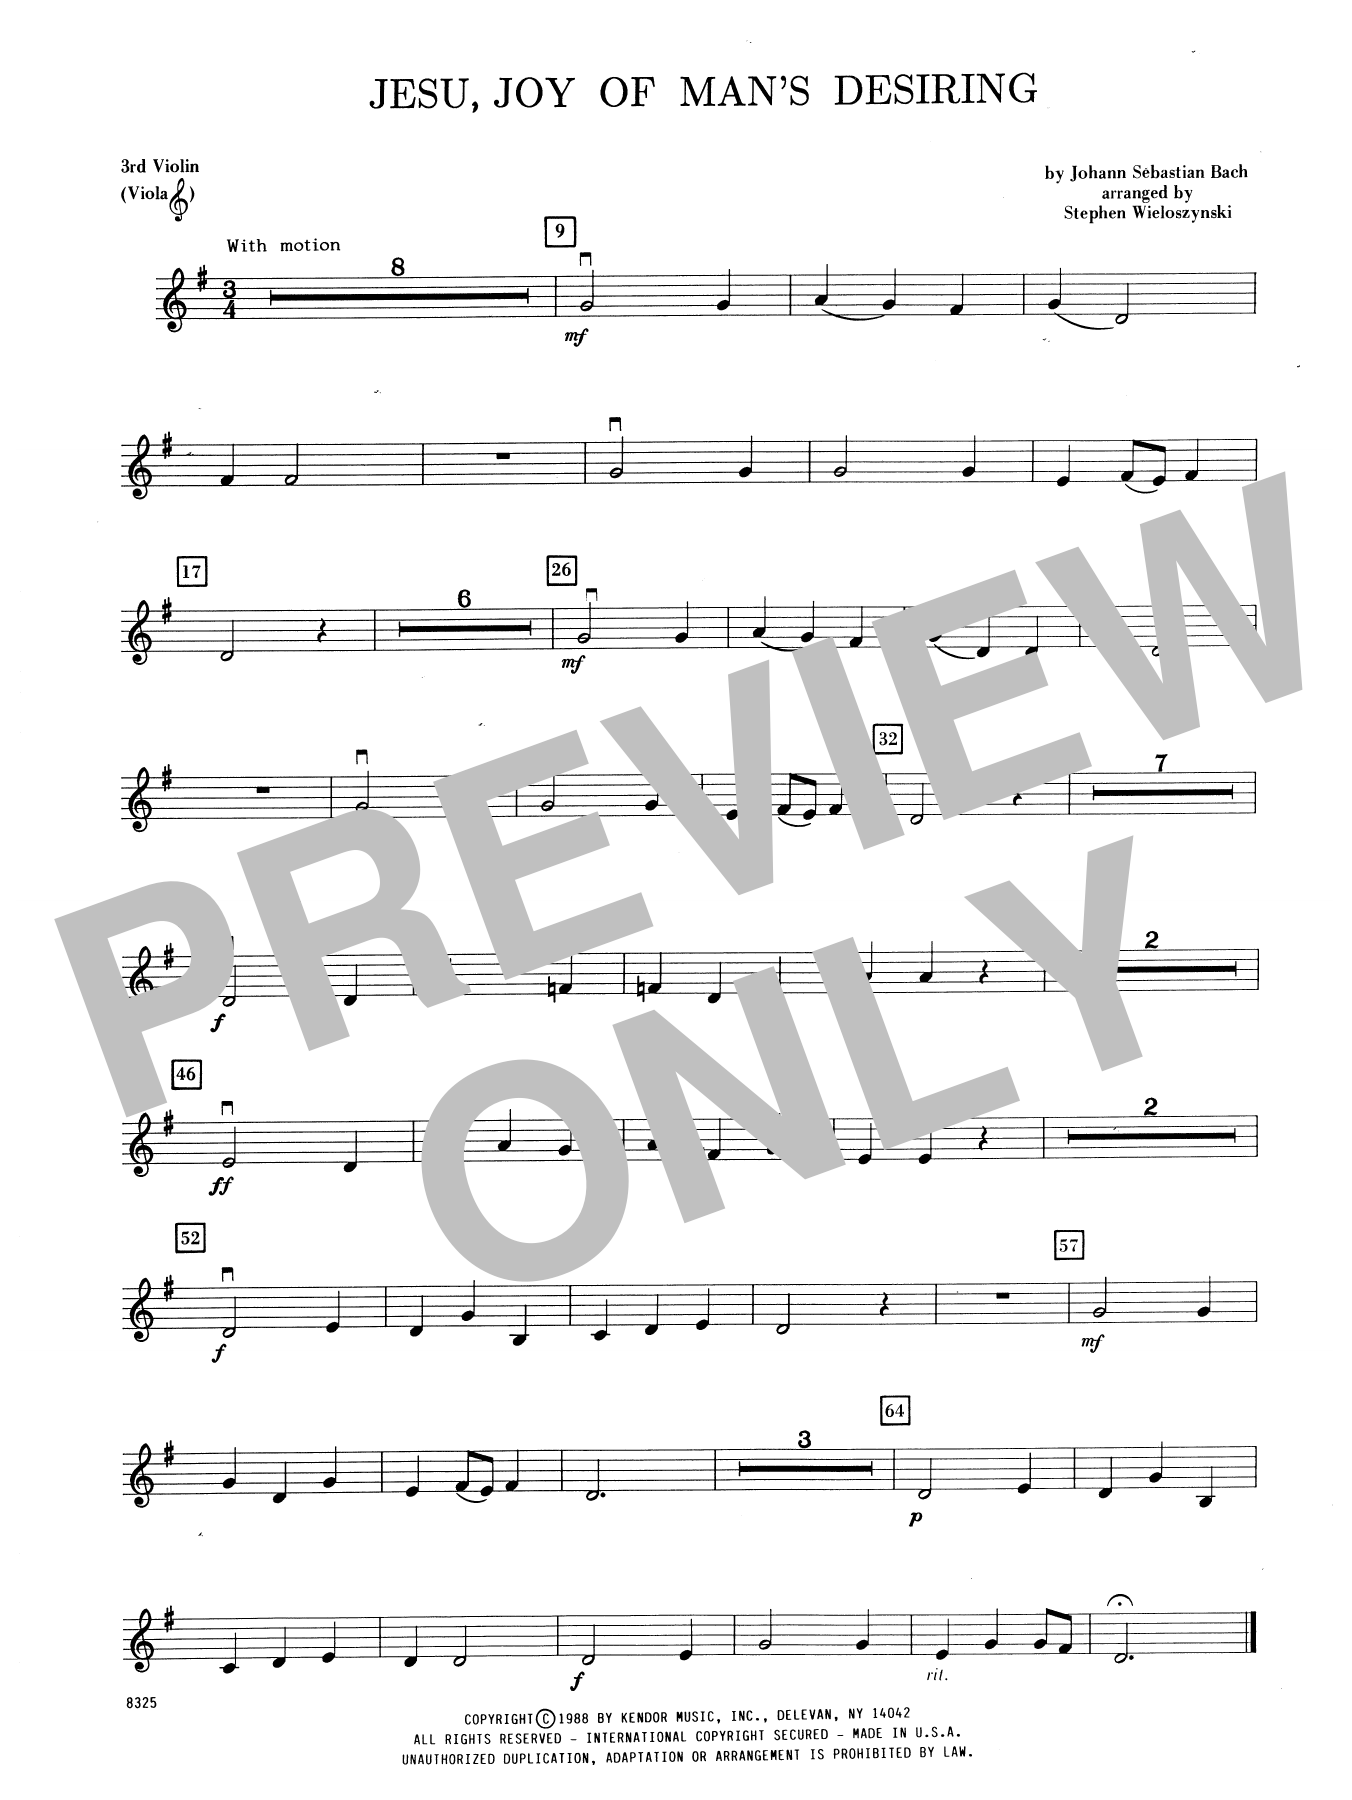 Download Stephen Wieloszynski Jesu, Joy of Man's Desiring - Violin 3 Sheet Music